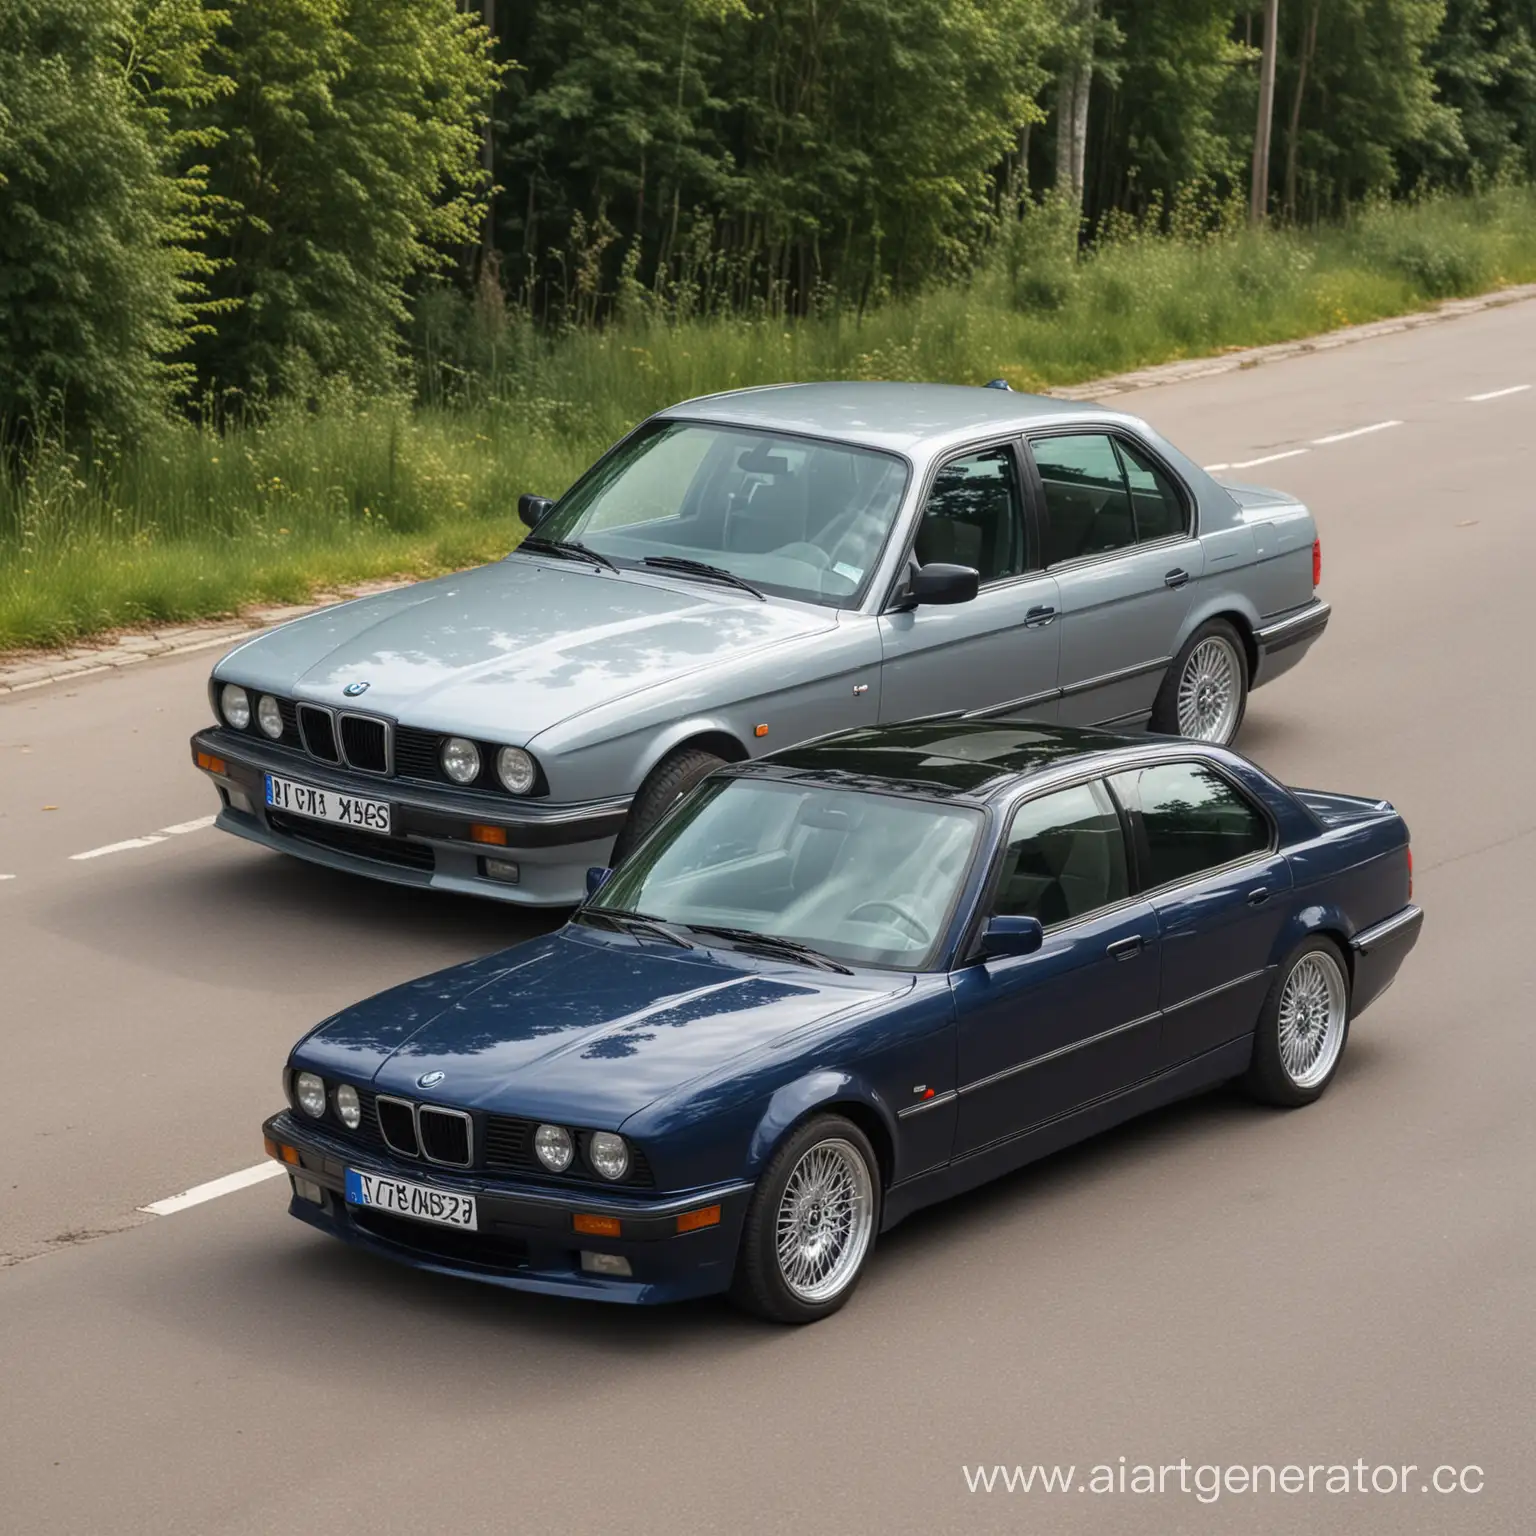 Luxury-BMW-E34-Driving-beside-Classic-VAZ-2114